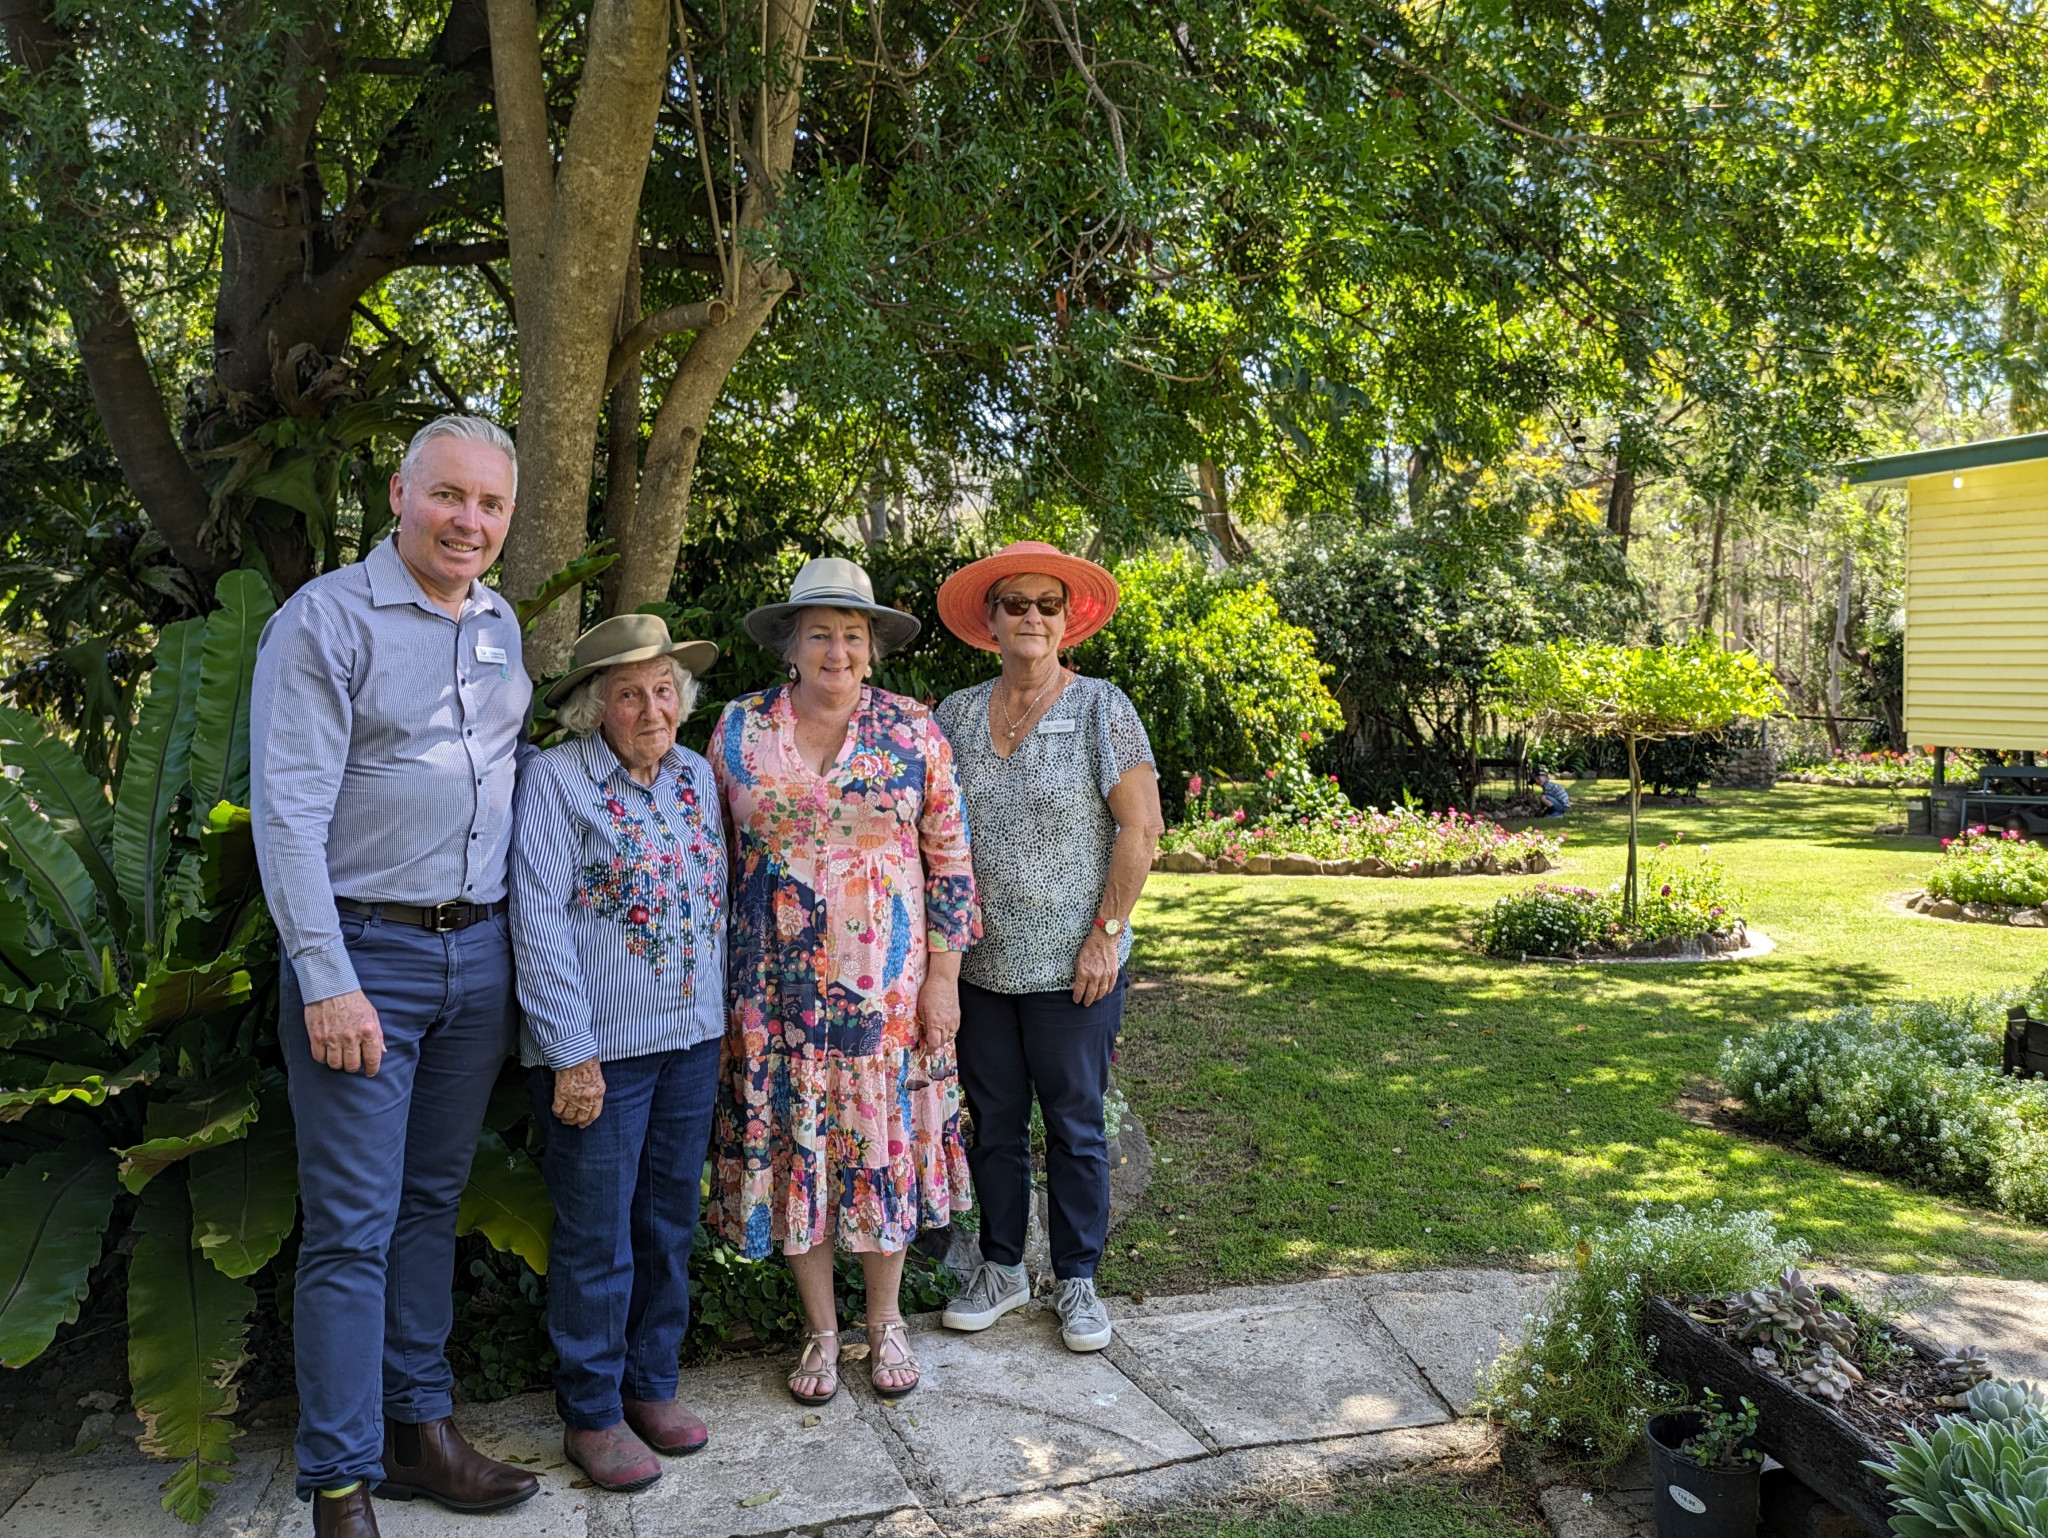 Winner of Best Rural Garden in the Somerset Garden Competition, Faye Craddock (second from left) with judges Cr Sean Choat, Cr Janice Holstein (Lockyer Valley) and Cr Helen Brieschke.